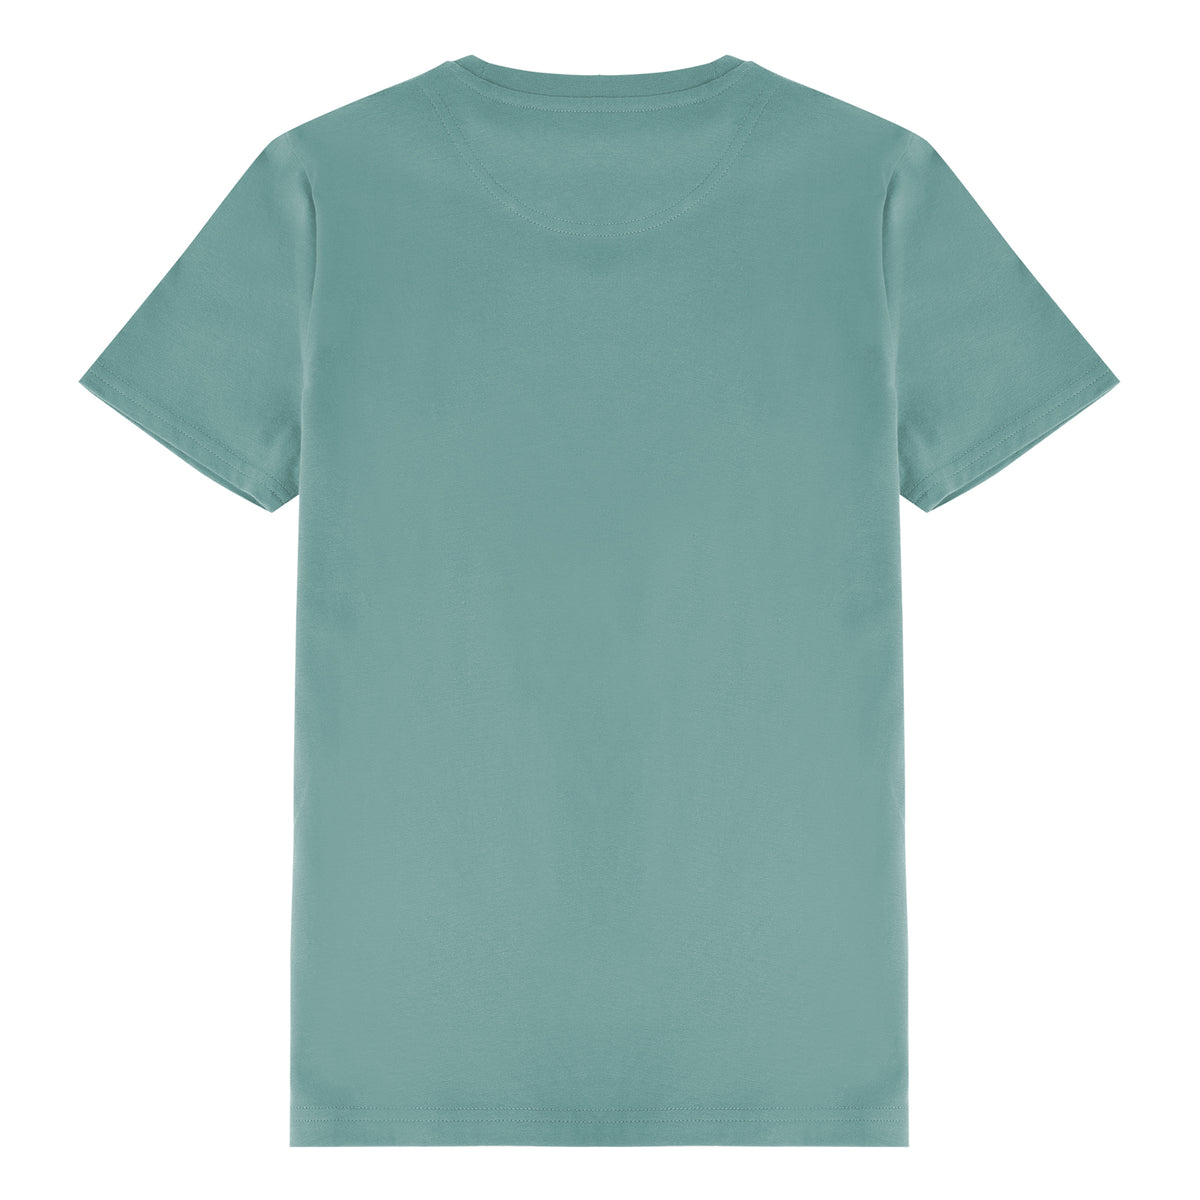 Lyle & Scott Boys 'Text Tee' Short Sleeved T-Shirt, 02, Lsc0896, Oil Blue